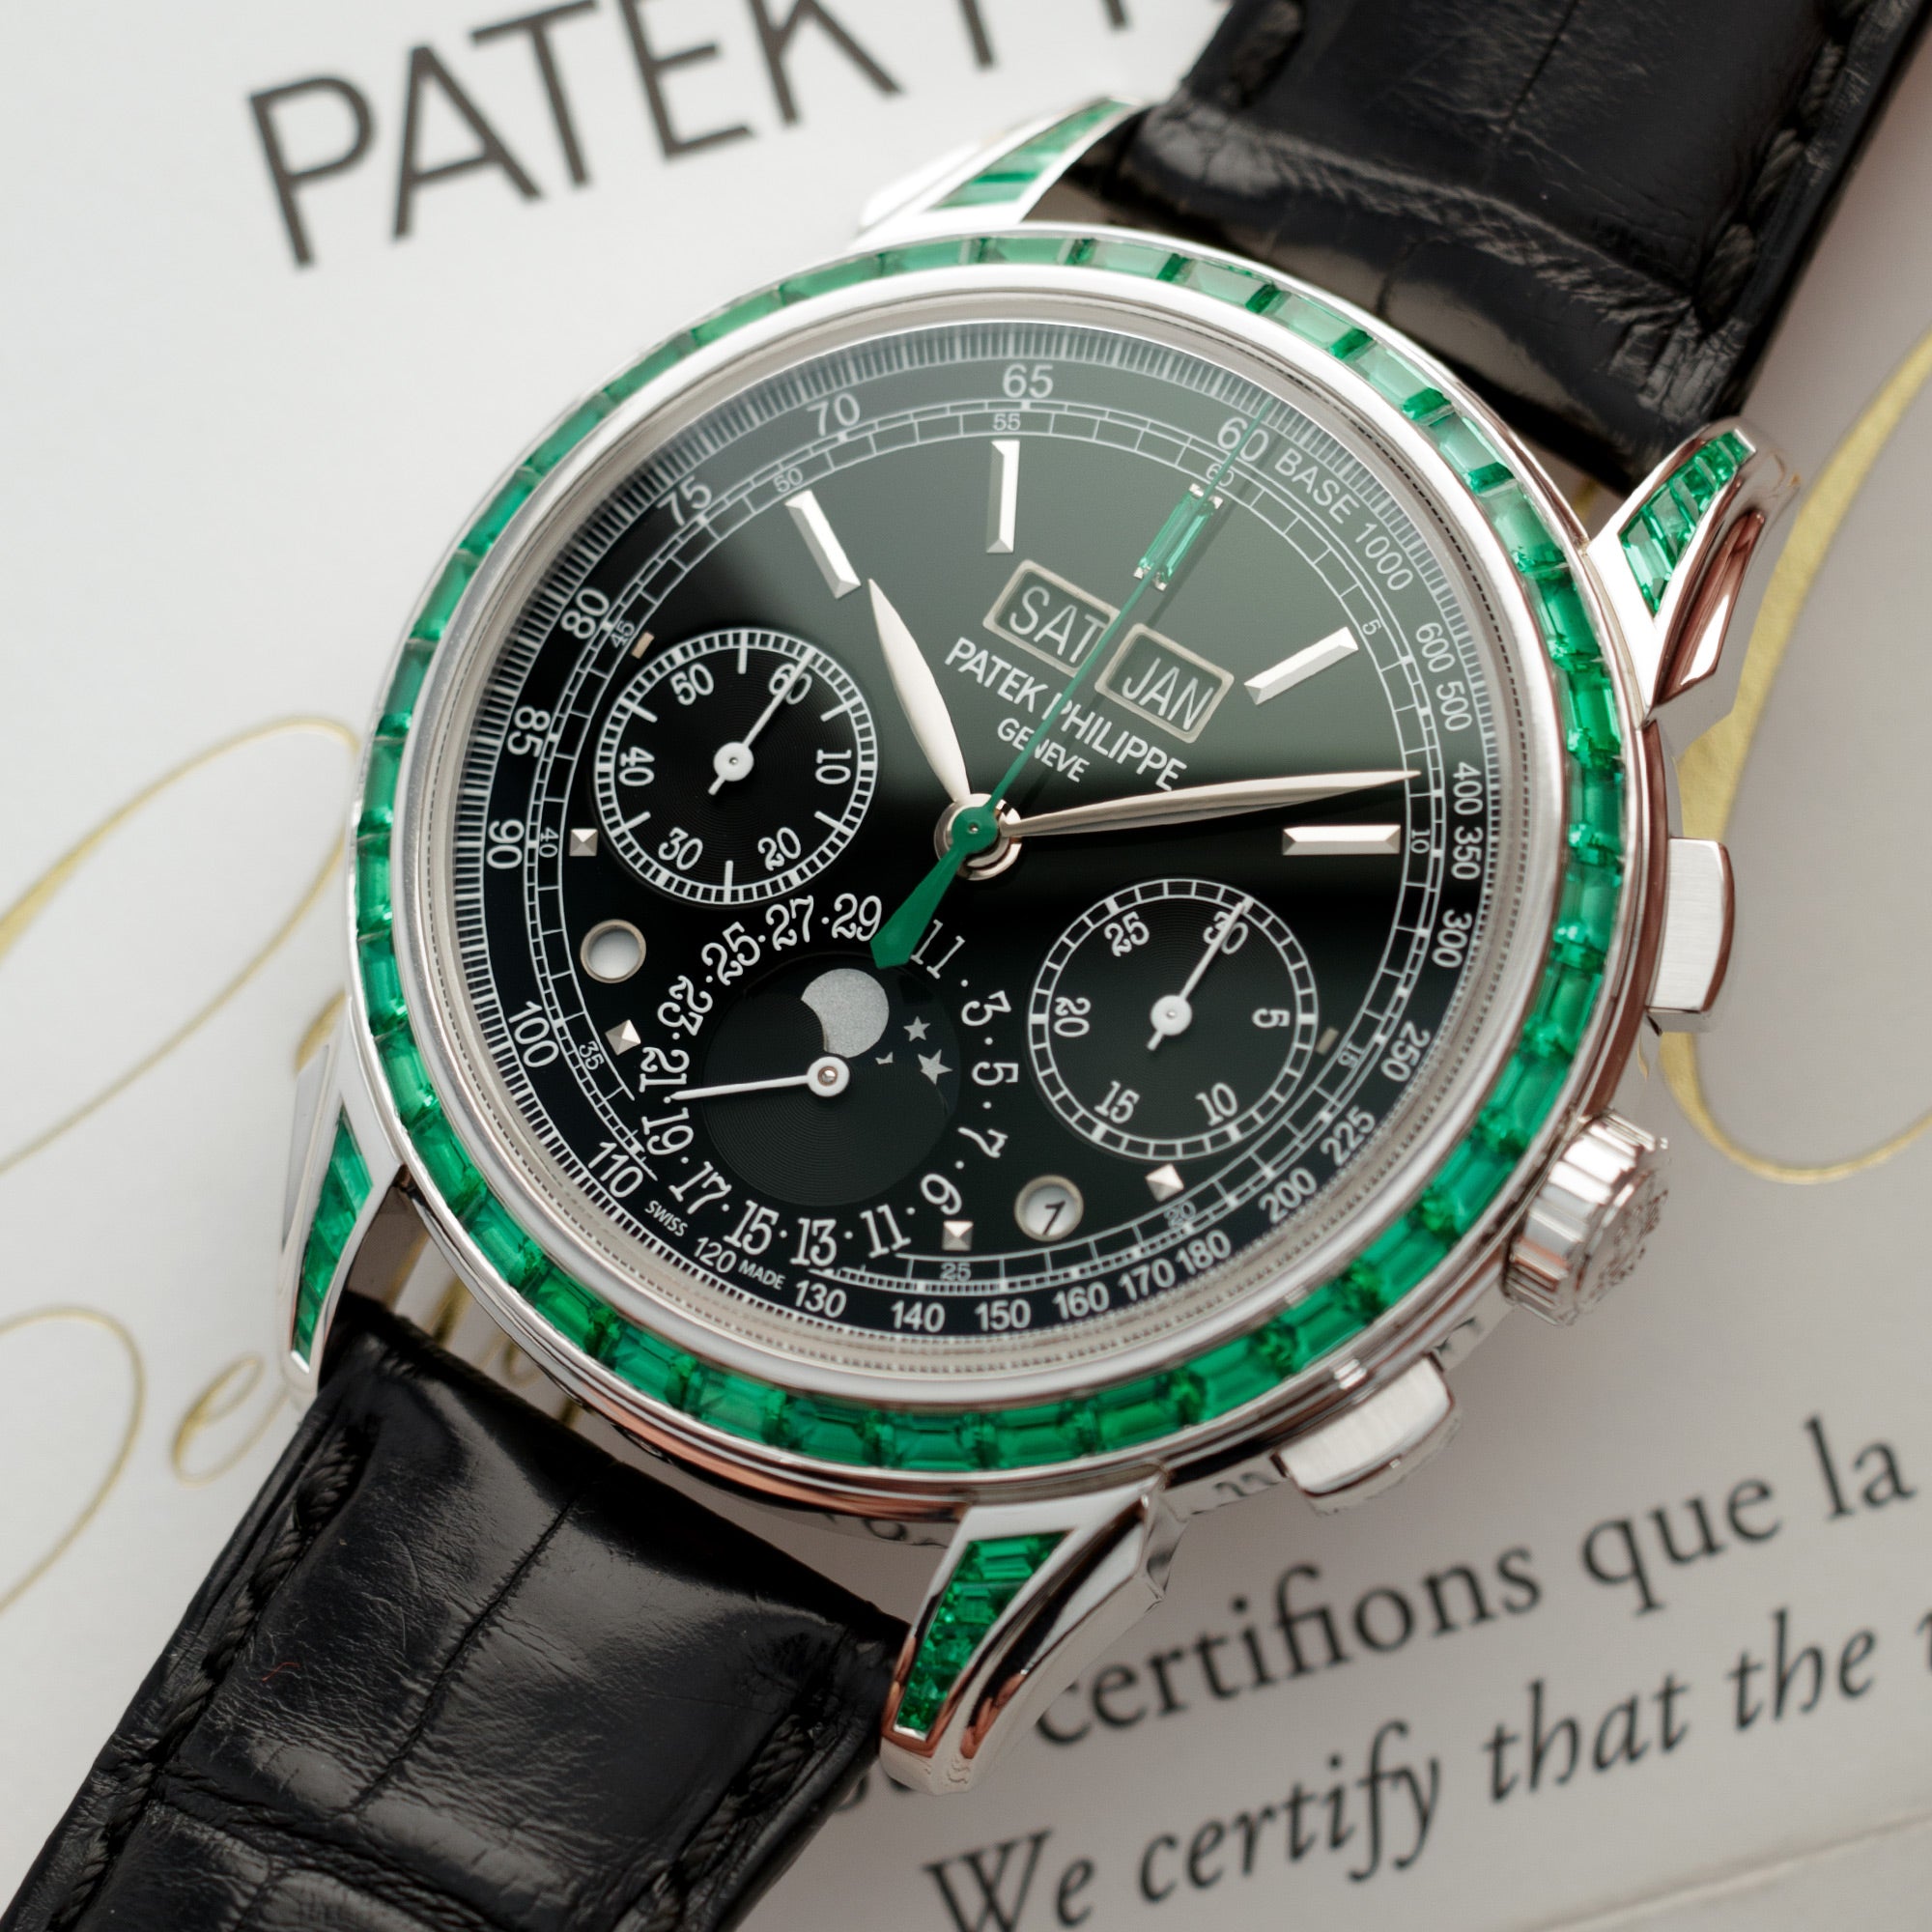 Patek Philippe - Patek Philippe Platinum and Emerald Perpetual Calendar Chronograph Watch Ref. 5271 - The Keystone Watches